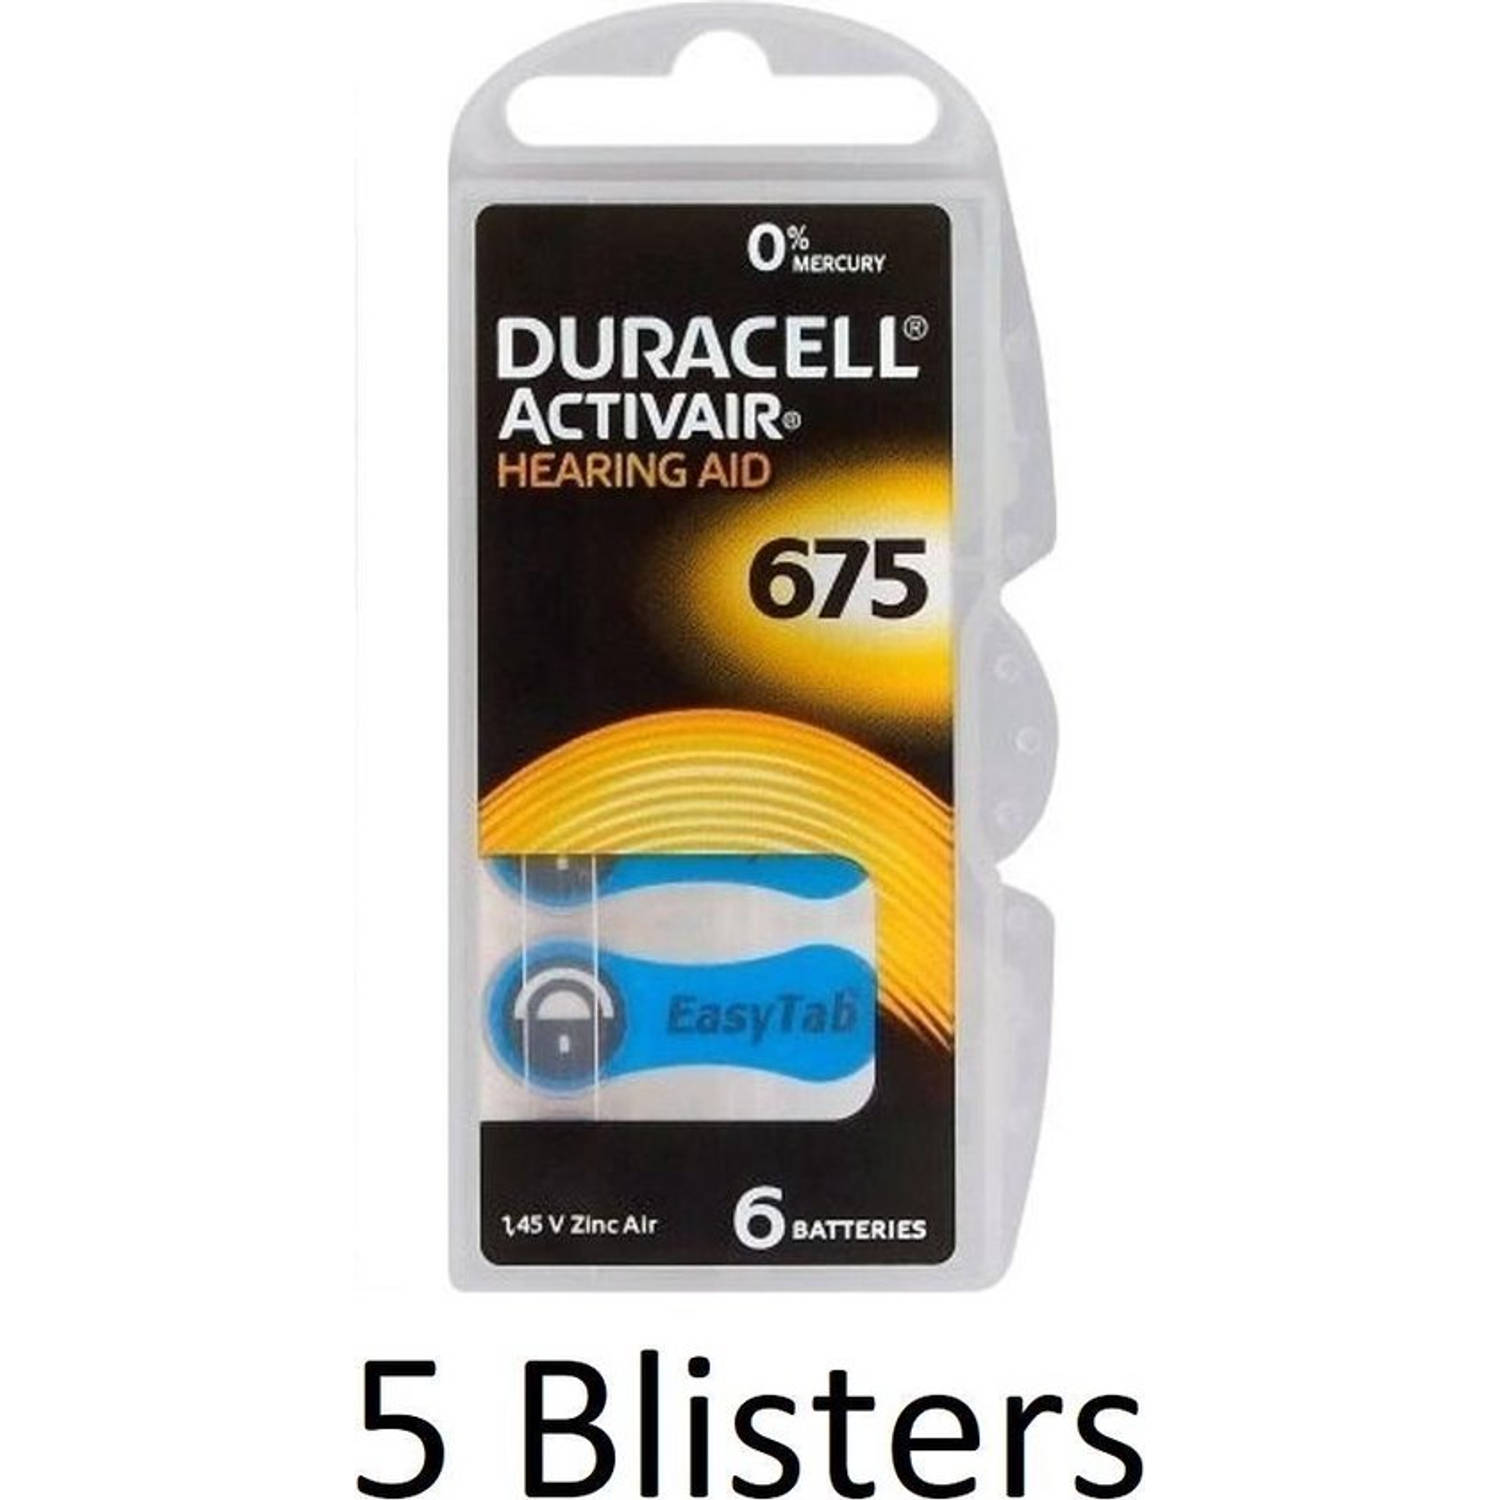 30 stuks (5 blisters a 6 st) Duracell DA675 hoorapparaat batterij - Blauw